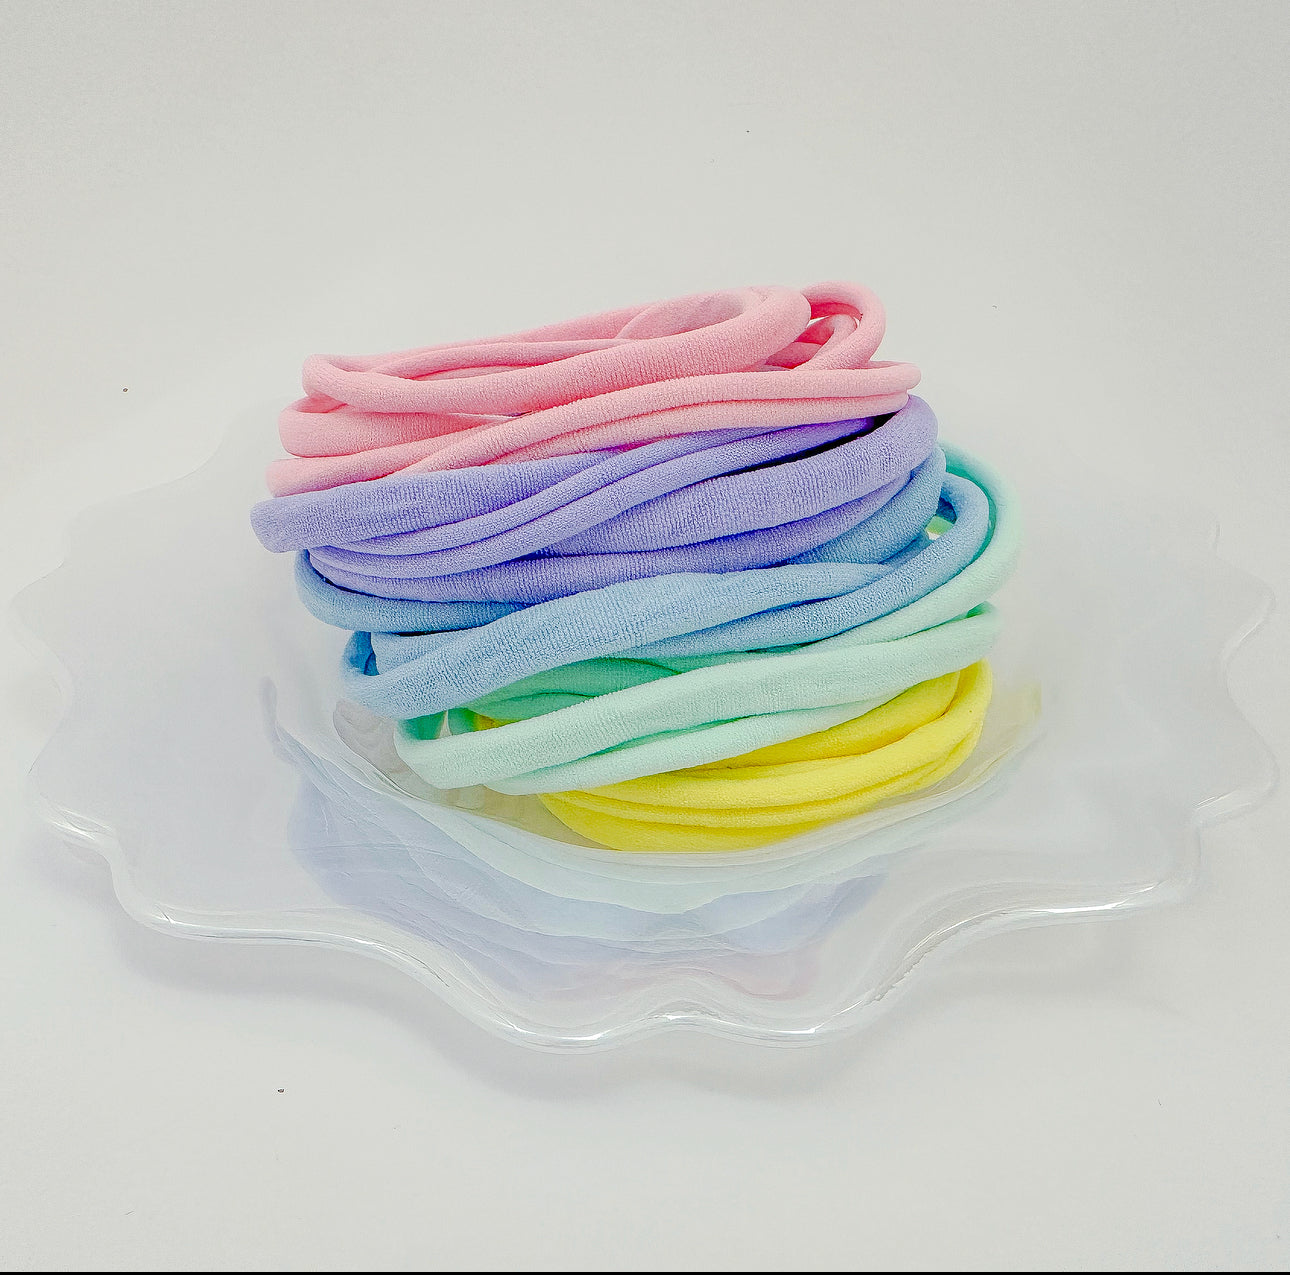 Rainbow Darling Nylon Headbands Bundle